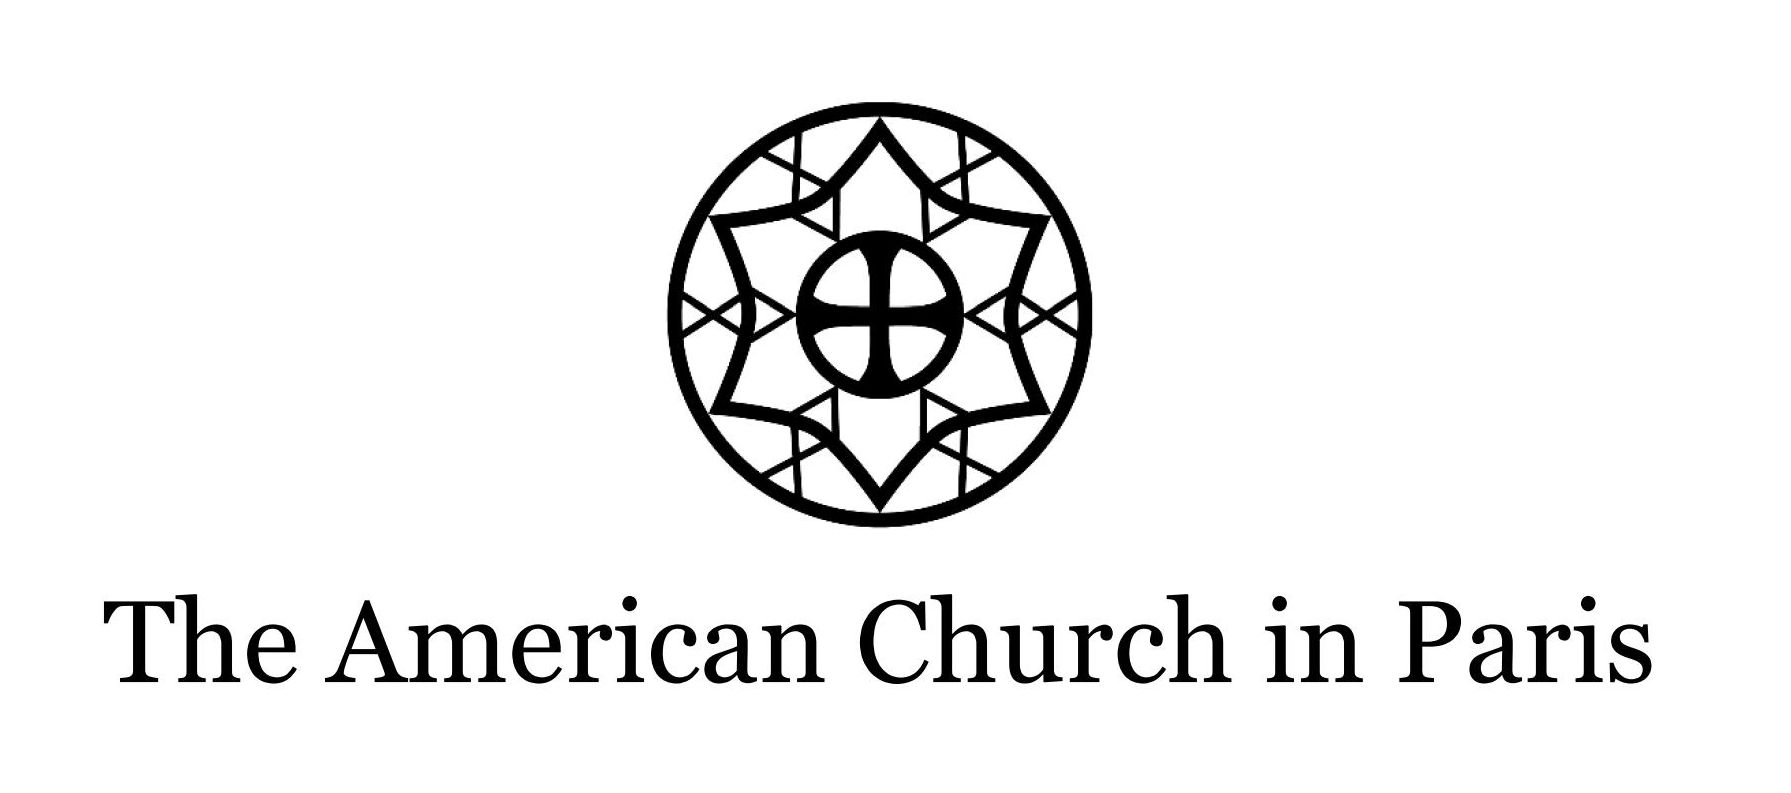 American Church in Paris logo